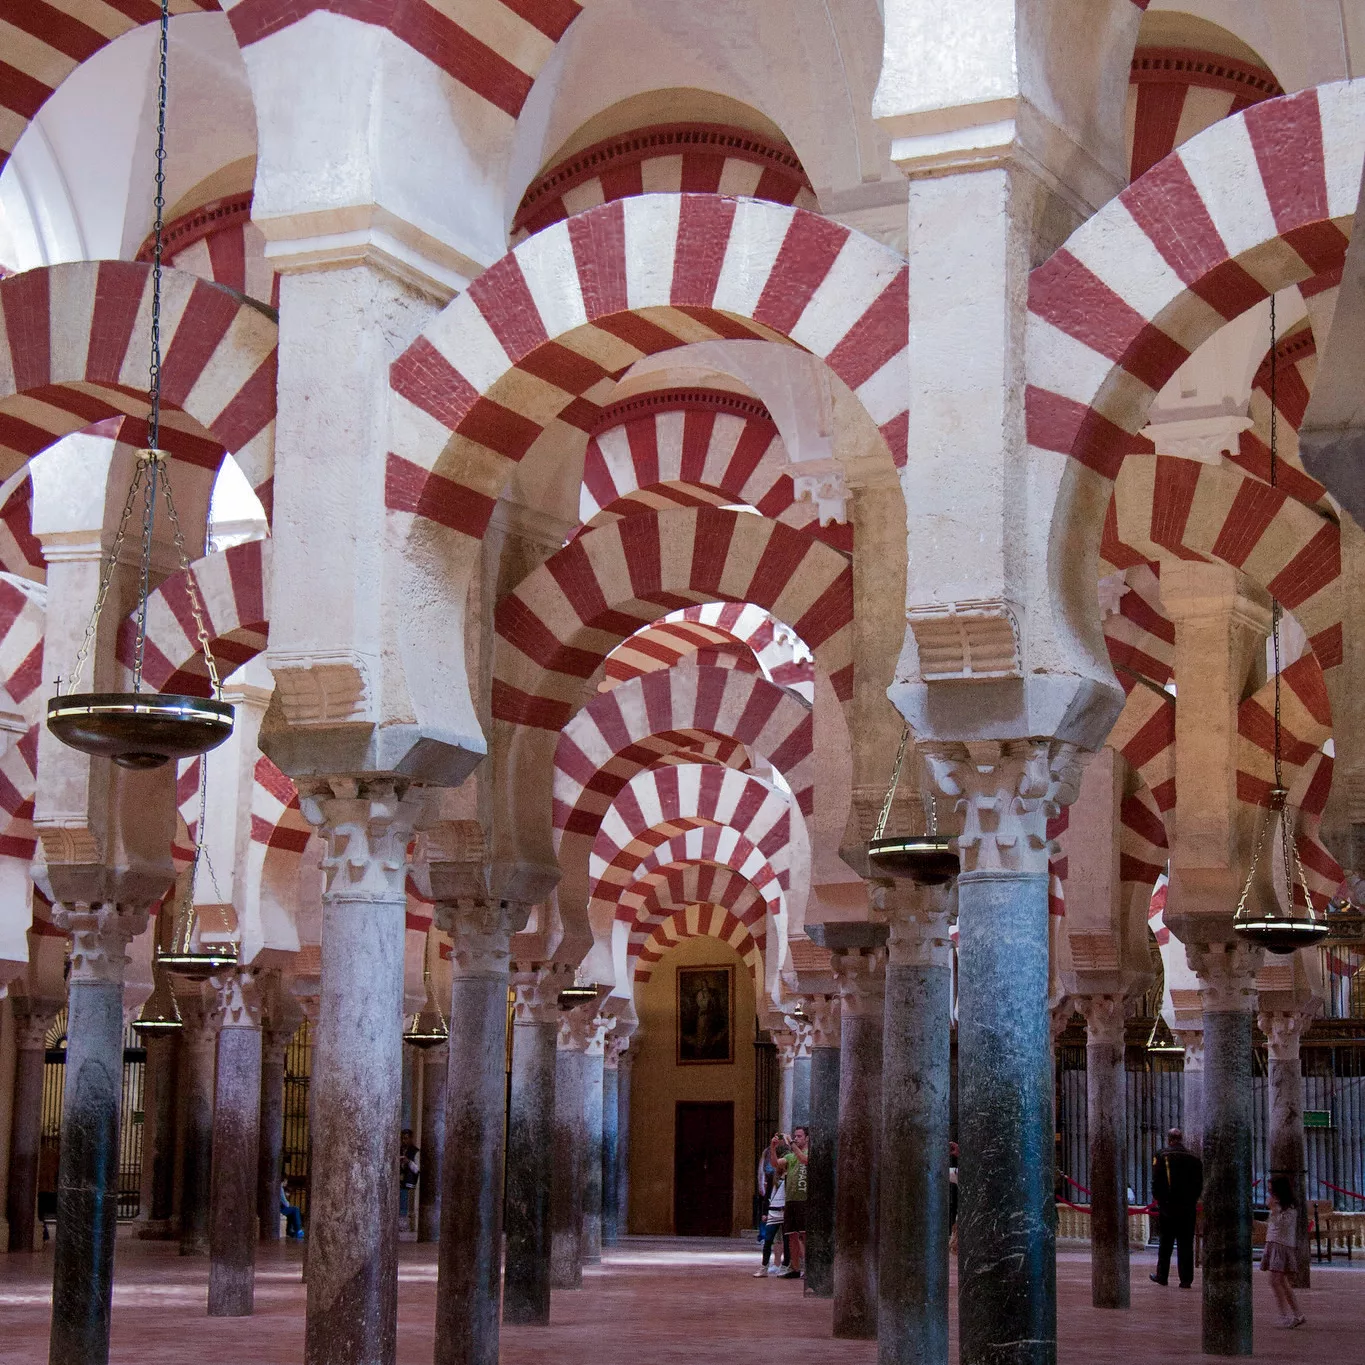 Inside the Mezquita of Cordoba